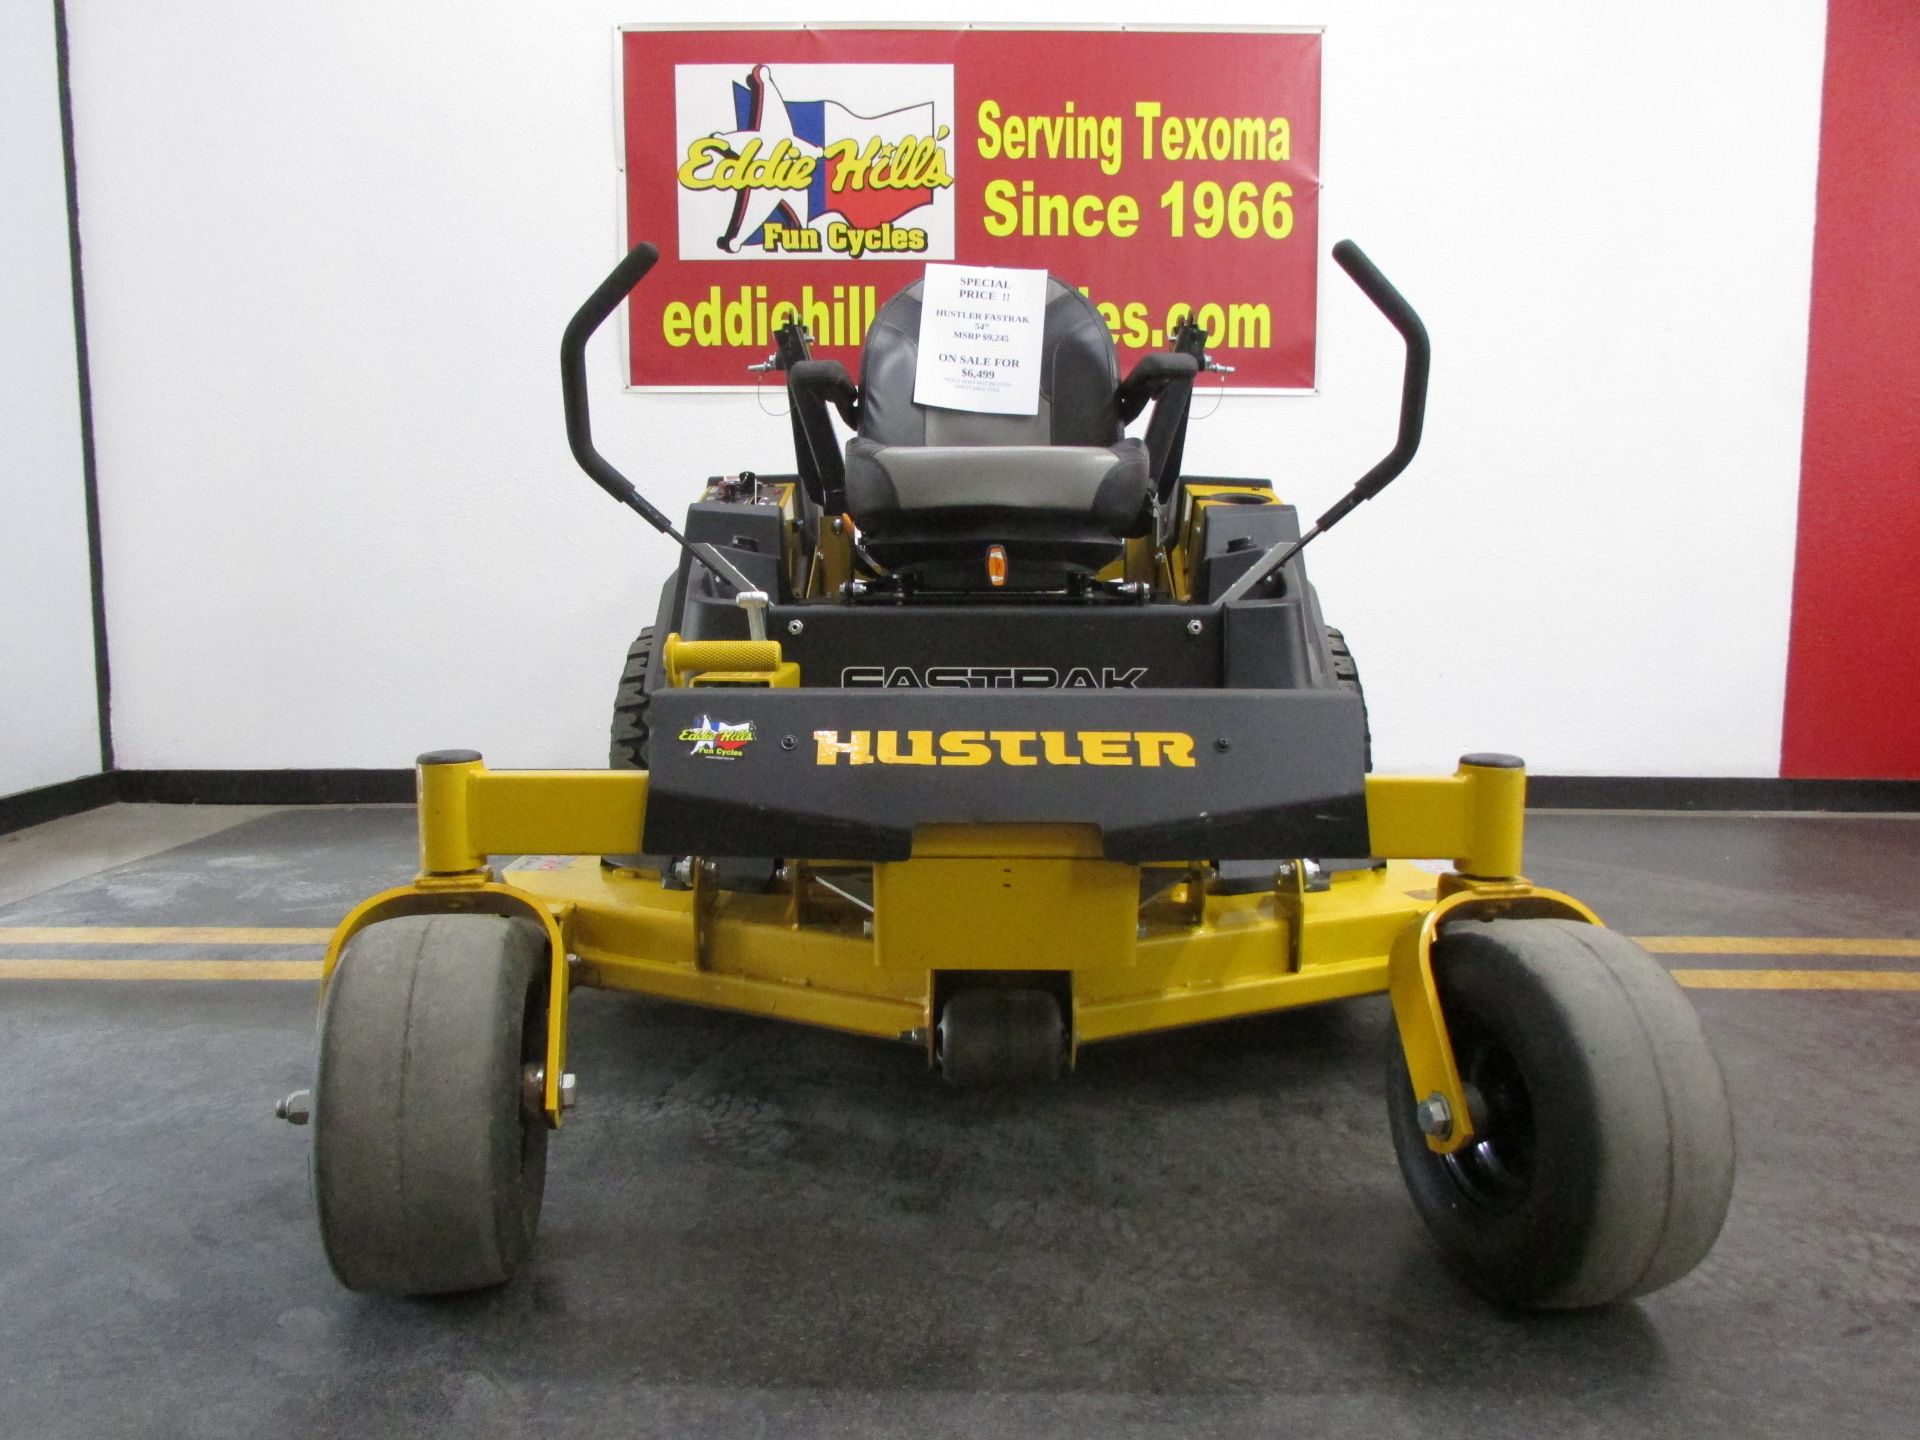 2022 Hustler Turf Equipment FasTrak 54 in. Kawasaki FT691 RD 22 hp in Wichita Falls, Texas - Photo 4